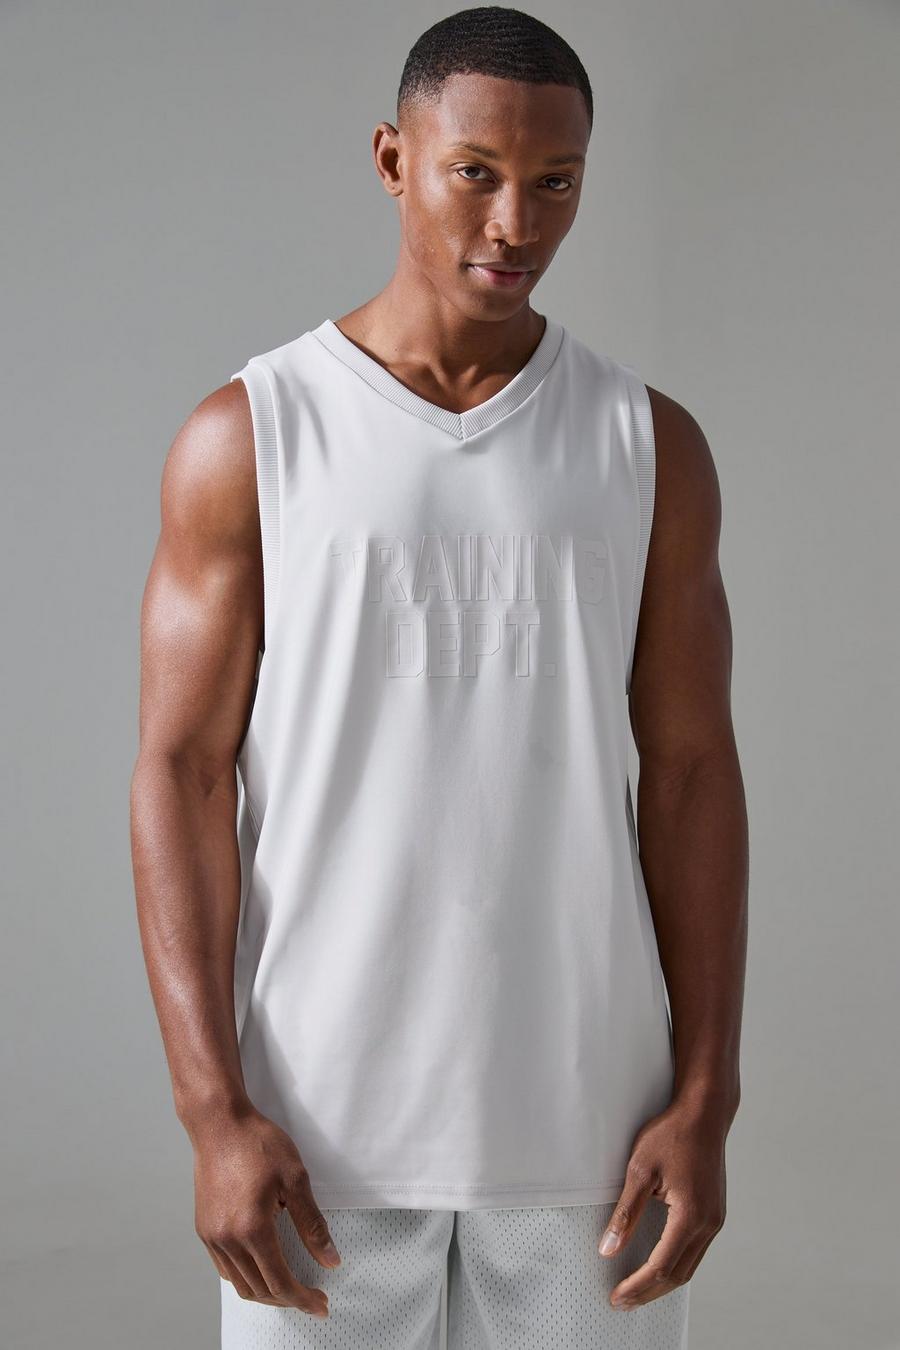 Camiseta sin mangas de baloncesto Active Training Dept, Light grey